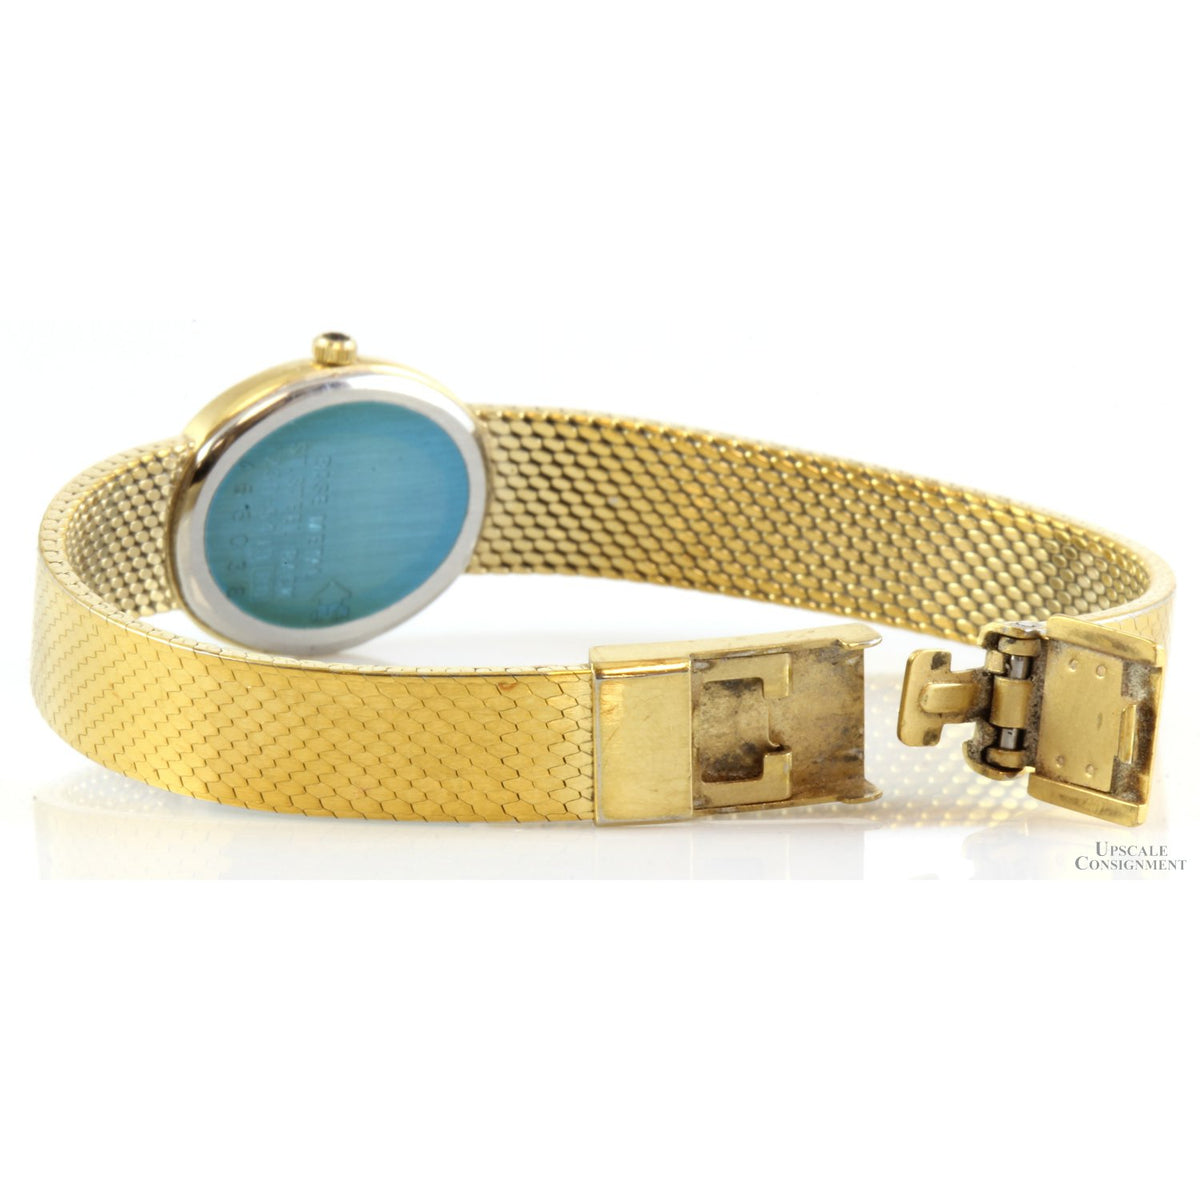 Seiko Lassale Gold Tone Quartz Watch 1230-5419 - New Battery